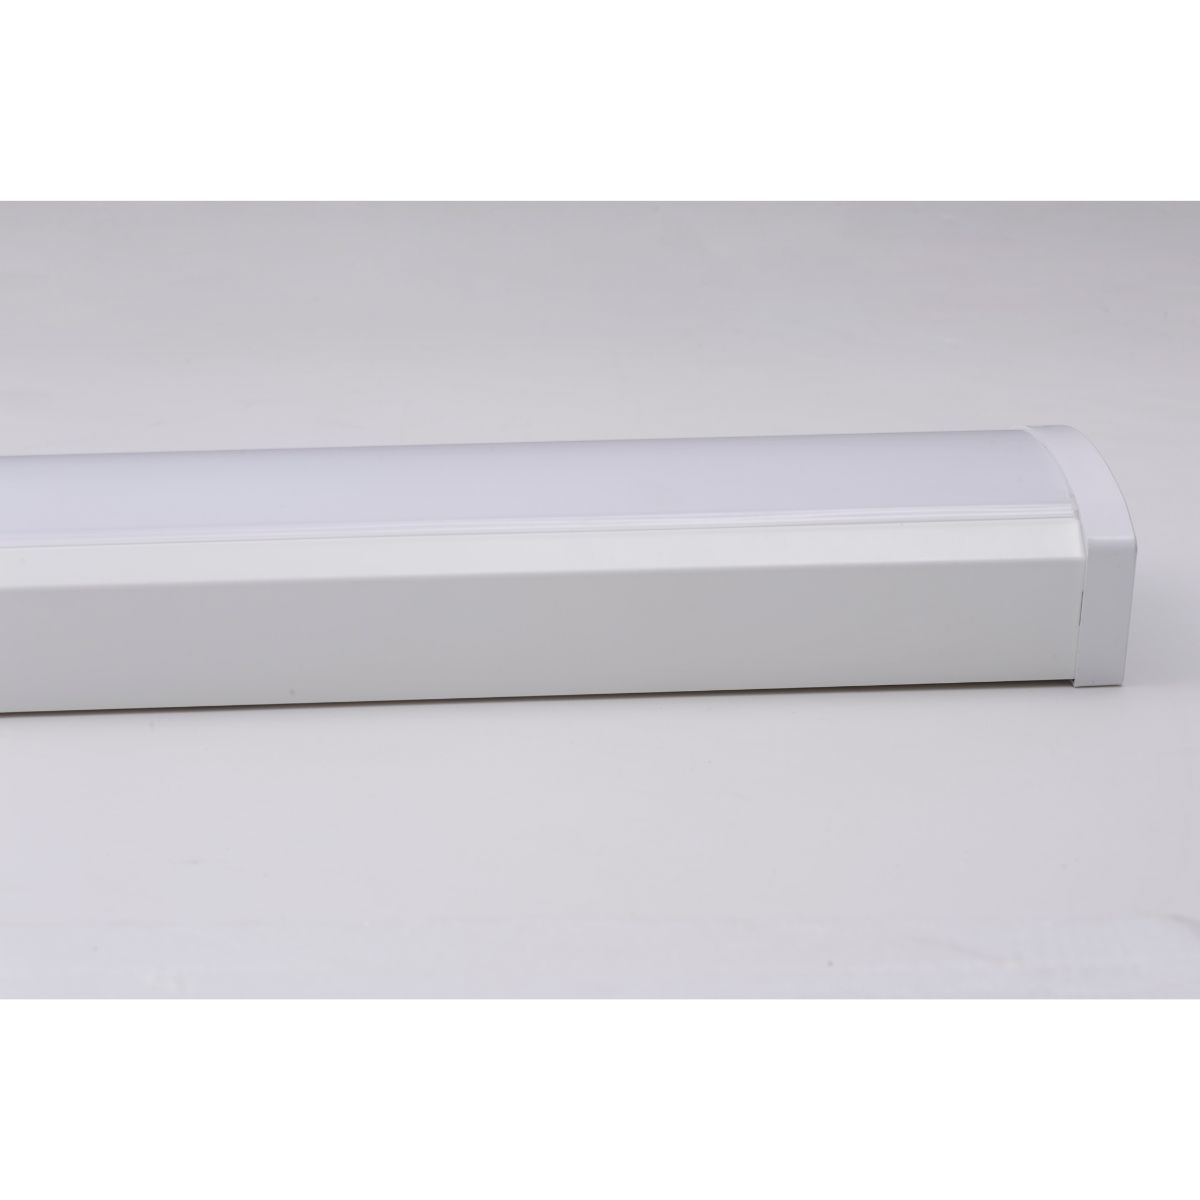 Wrap LED 48 x 5 in. LED Ceiling Wrap Light 3000K White Finish